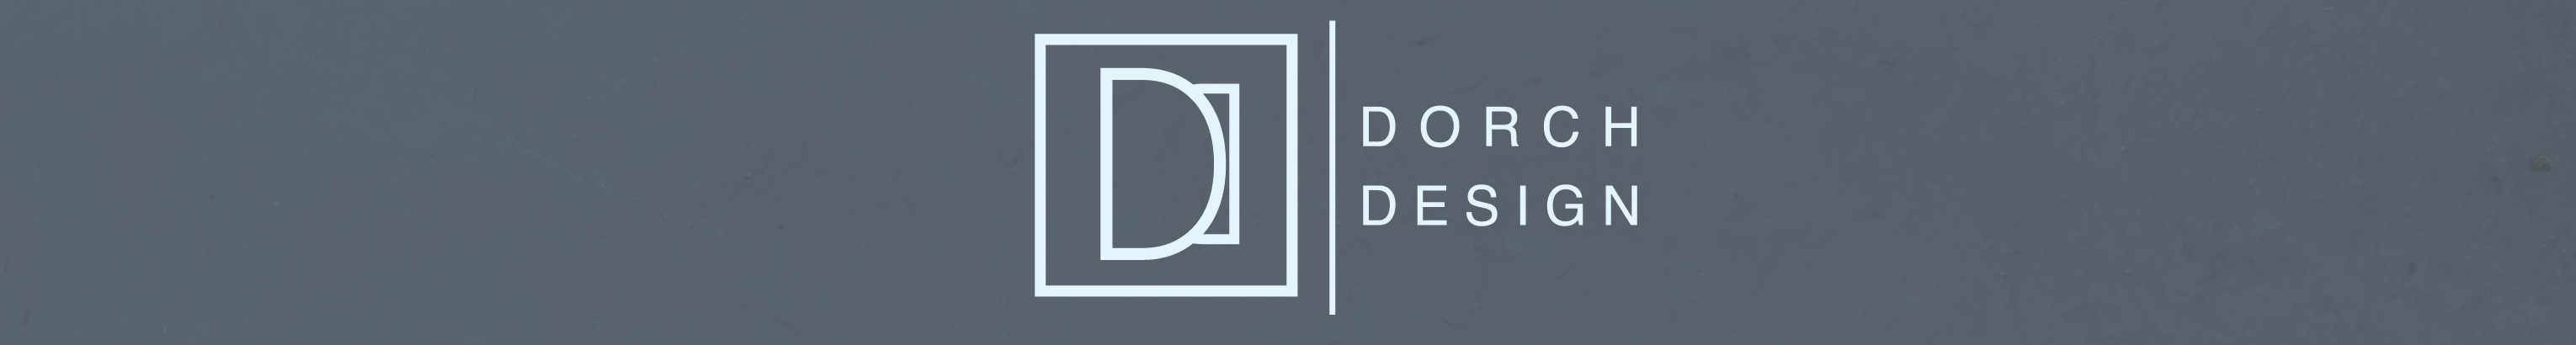 Damion Dorch's profile banner